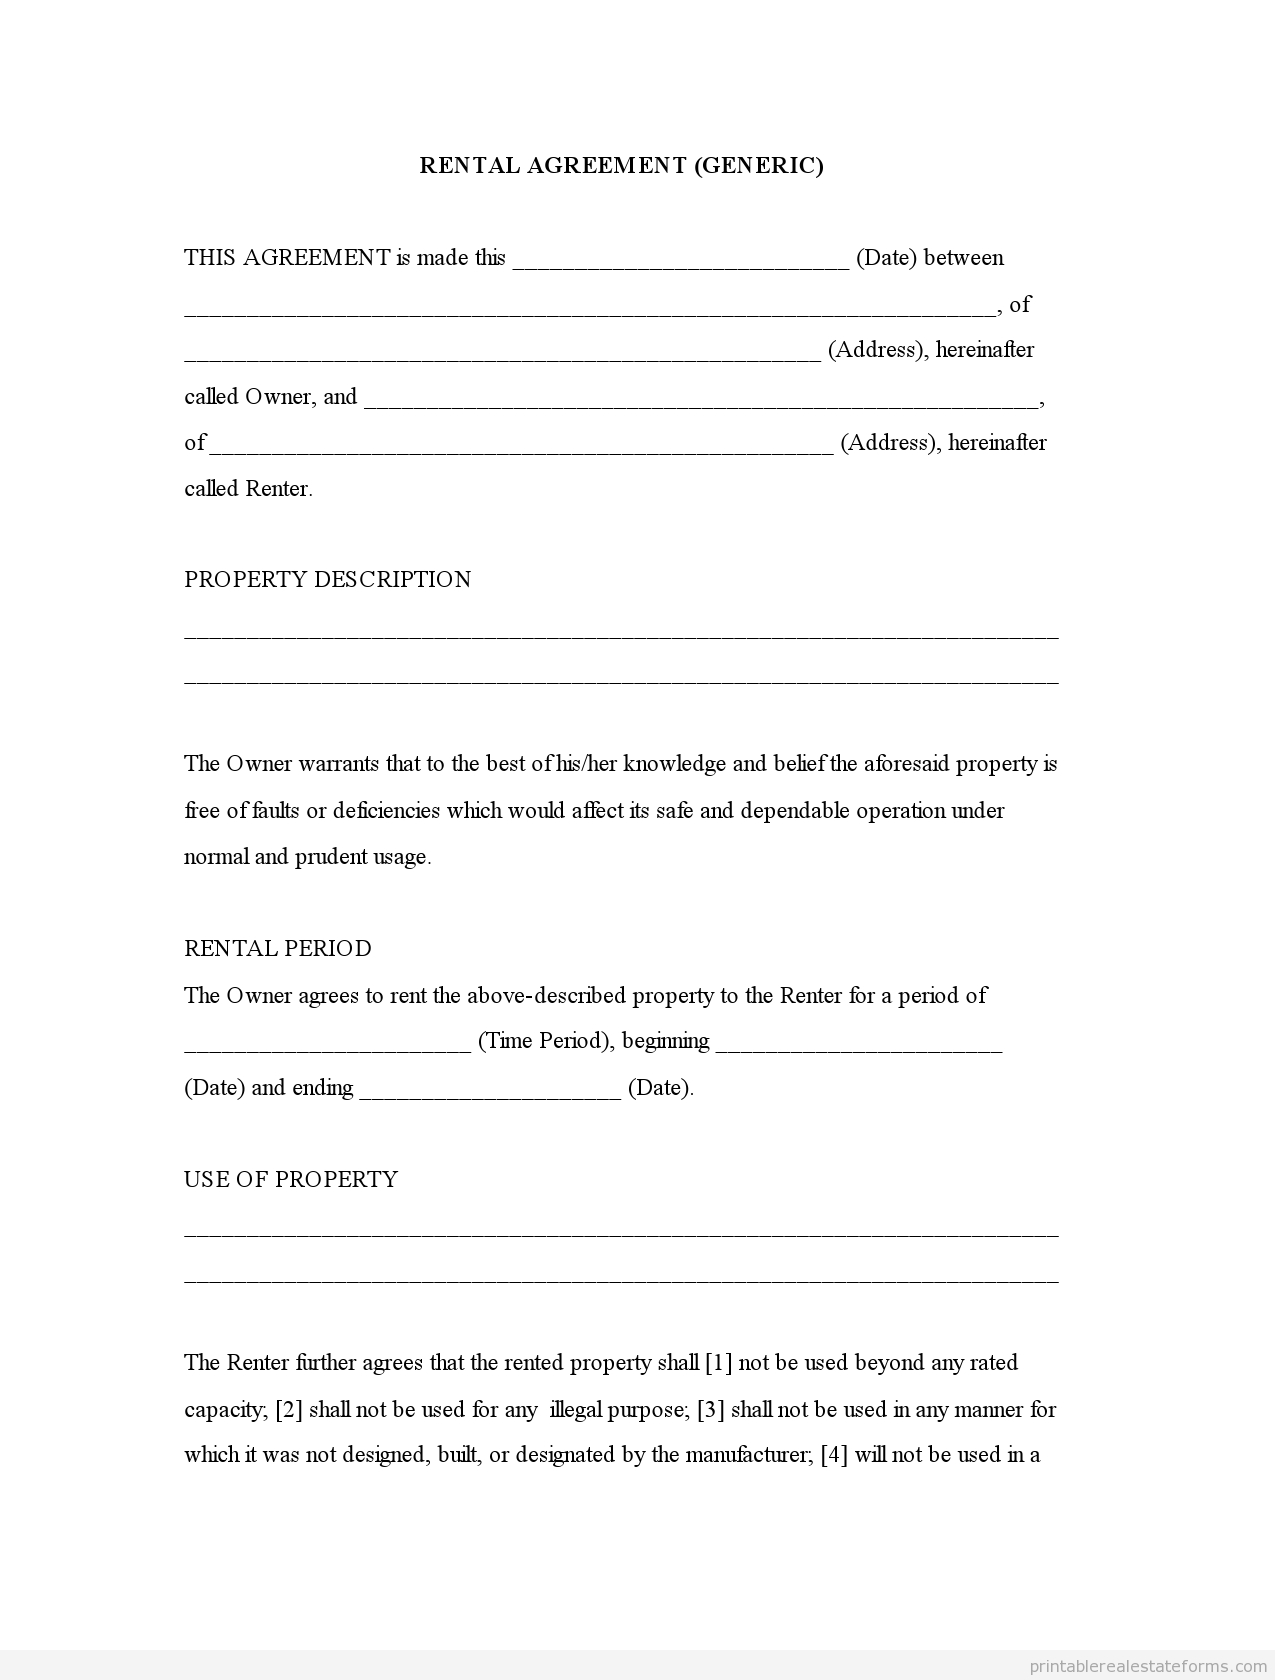 Free Printable Rental Agreement | Rental Agreement (Generic)0001 - Free Printable Rental Application Form